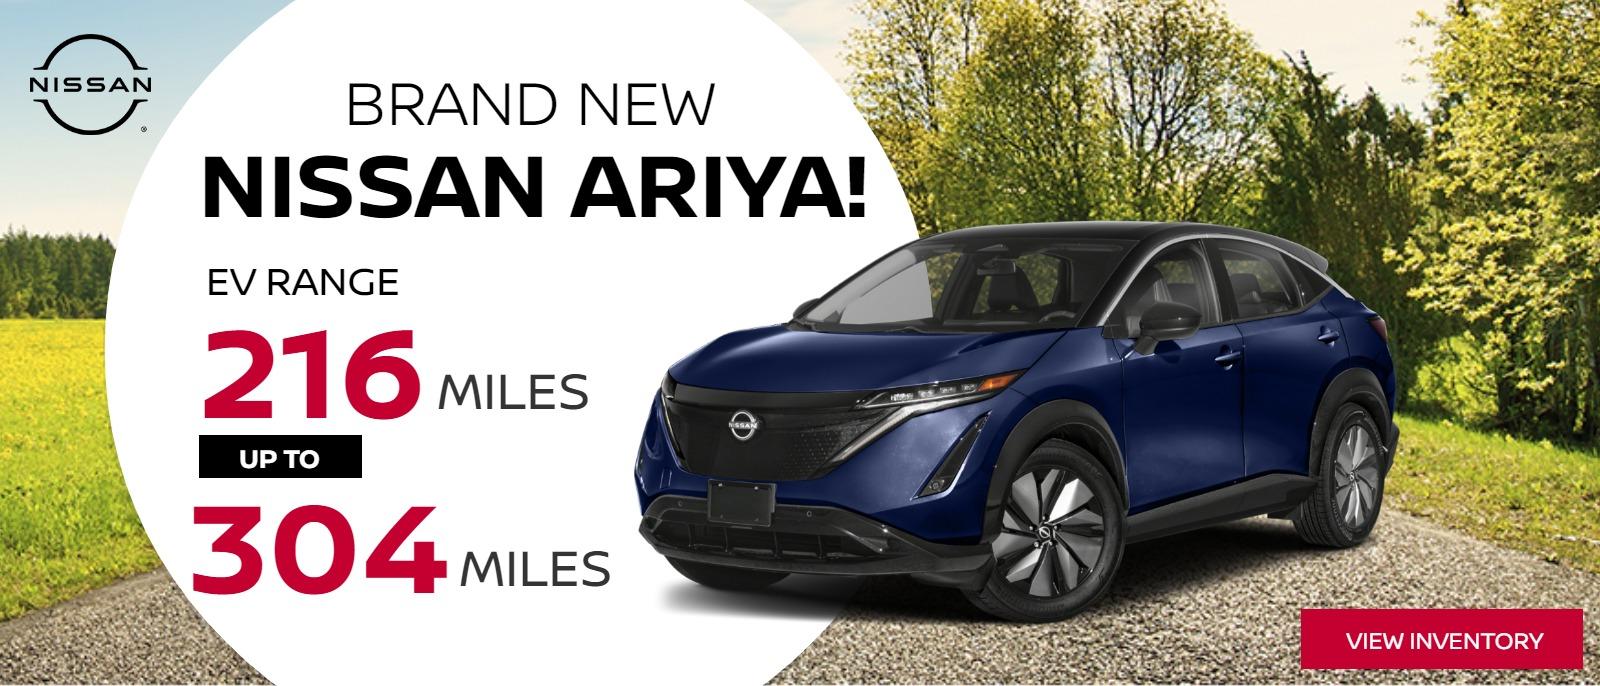 Brand New Nissan Ariya! EV range - 216 miles up to 304 miles!